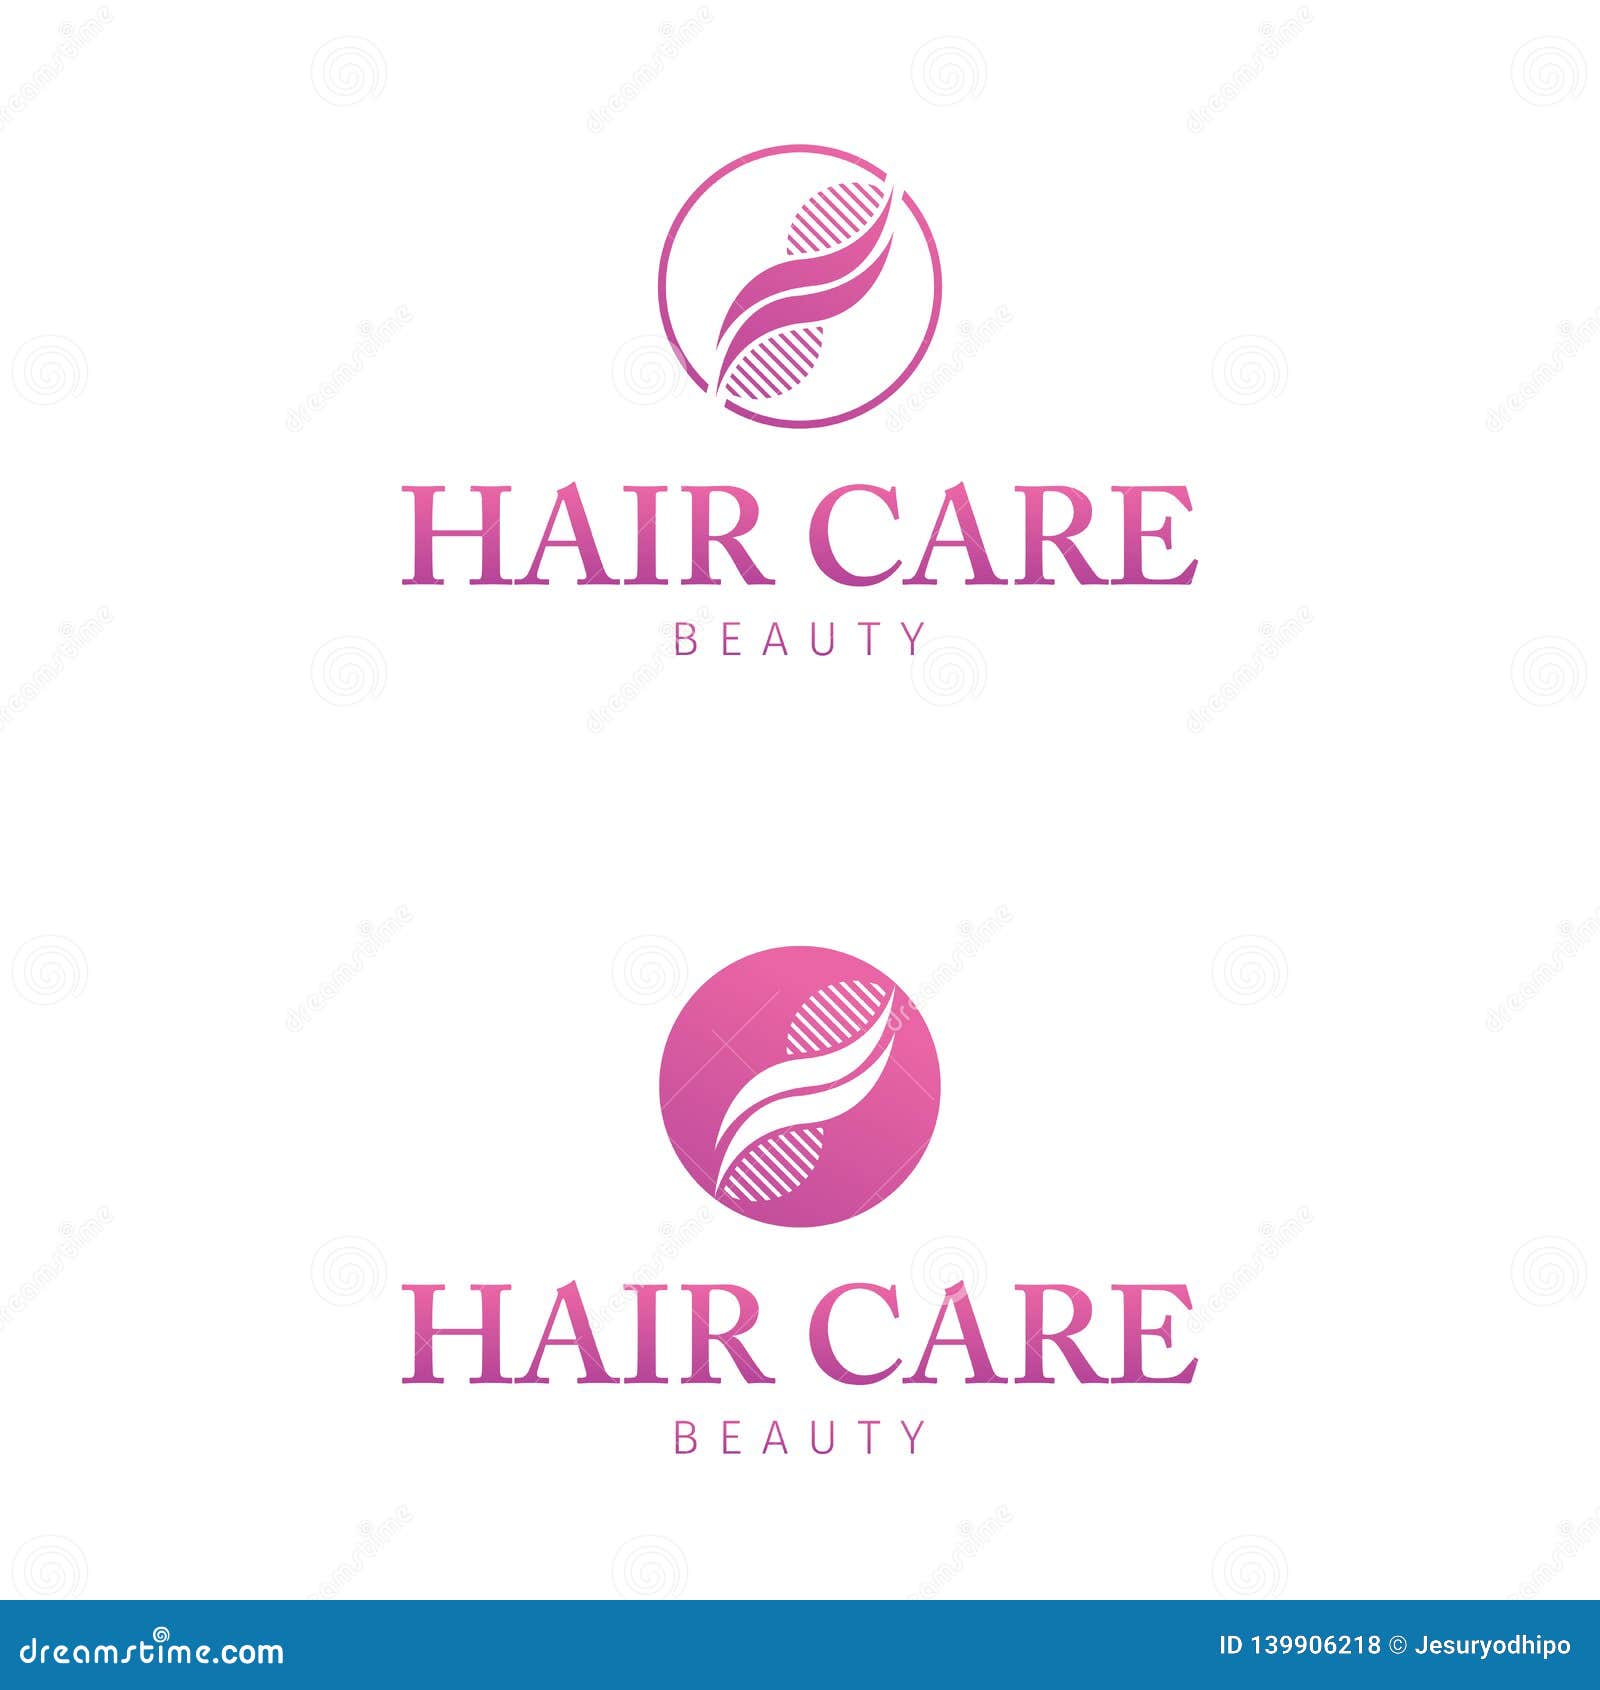 Hair Product Logos | Hair Product Logo Maker | BrandCrowd